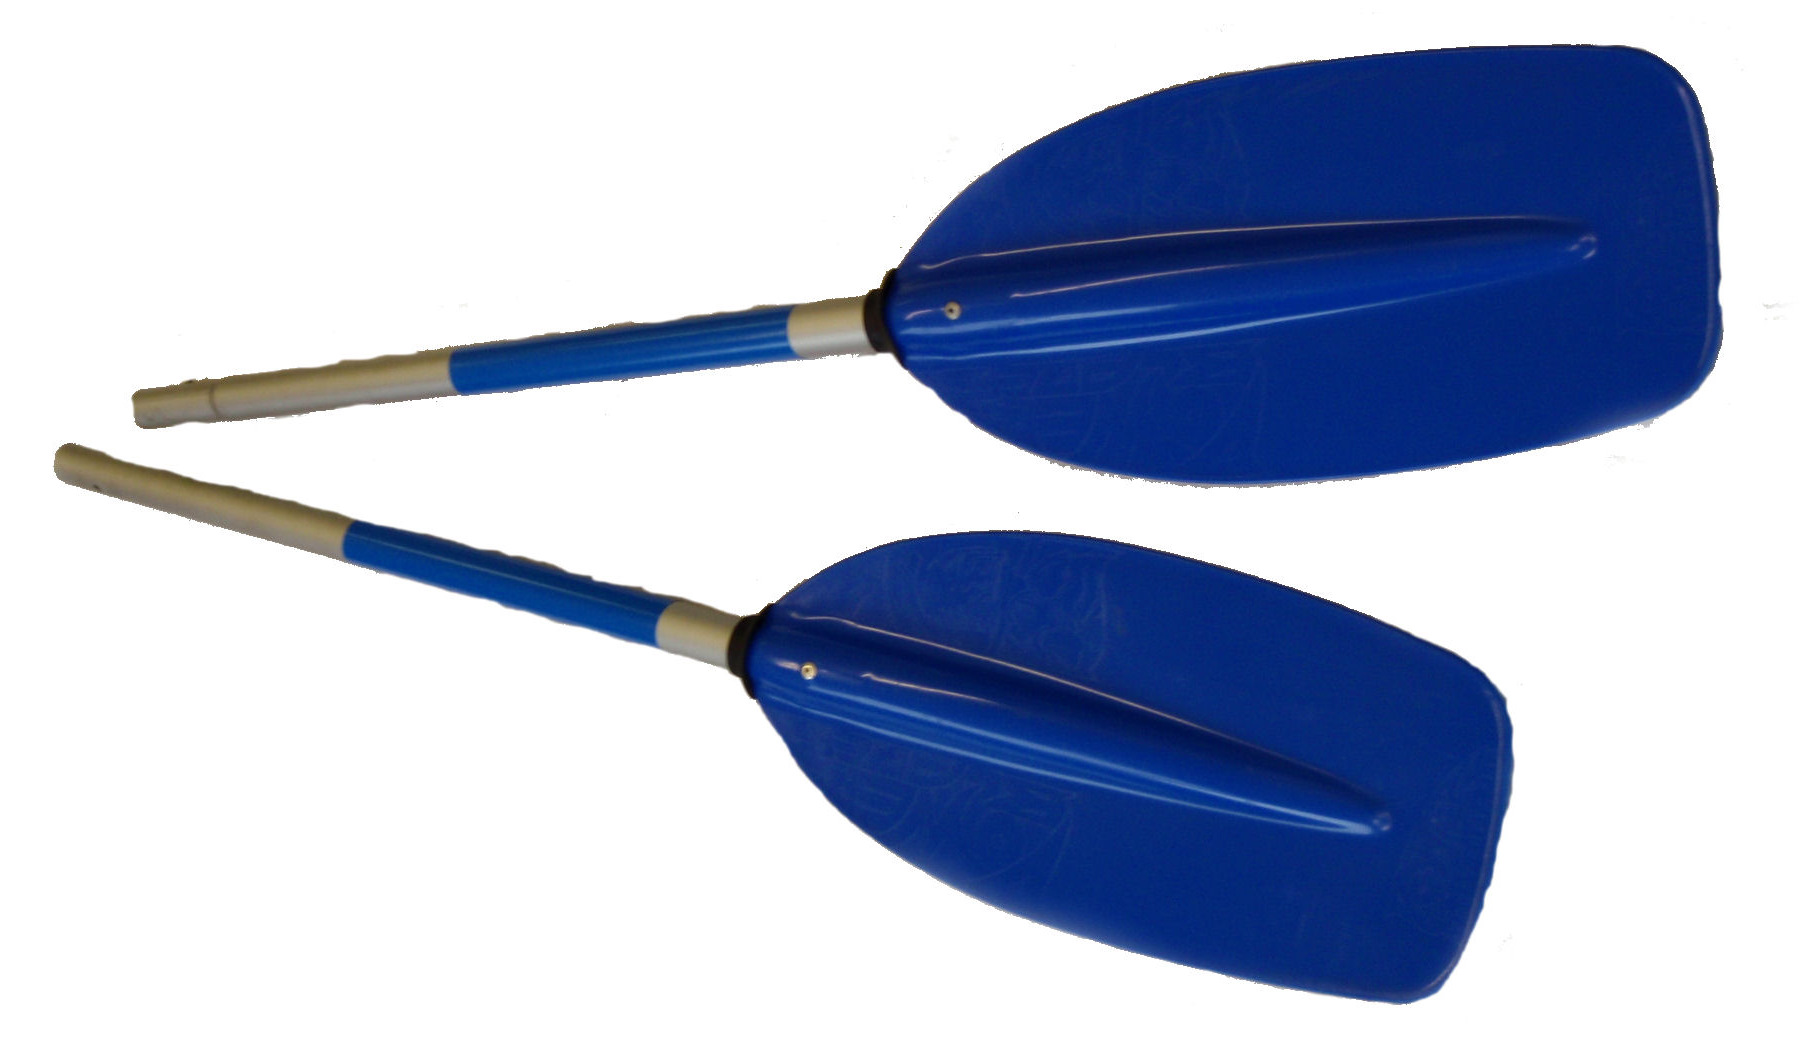 Double Powerblade kayak paddle (aluminium with heatshrink) by Australis